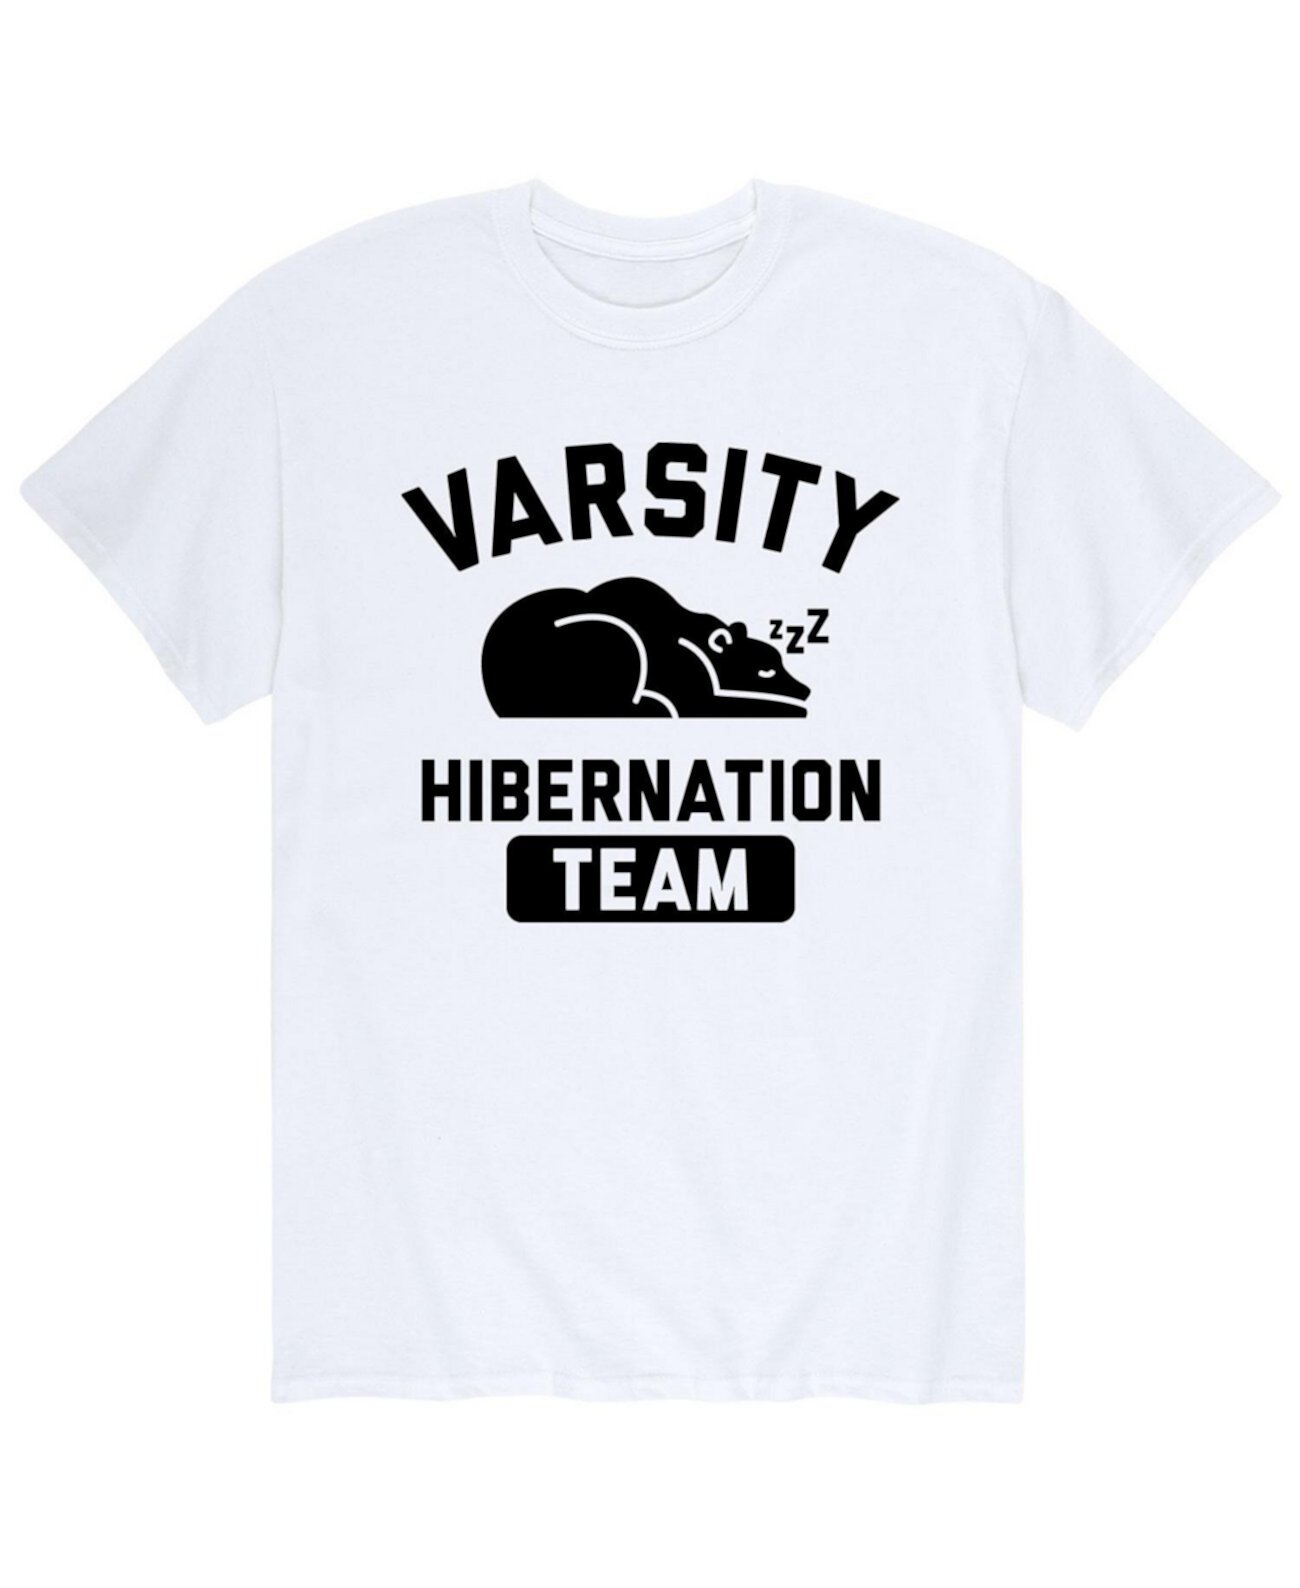 Мужская футболка с коротким рукавом Hibernation Team AIRWAVES